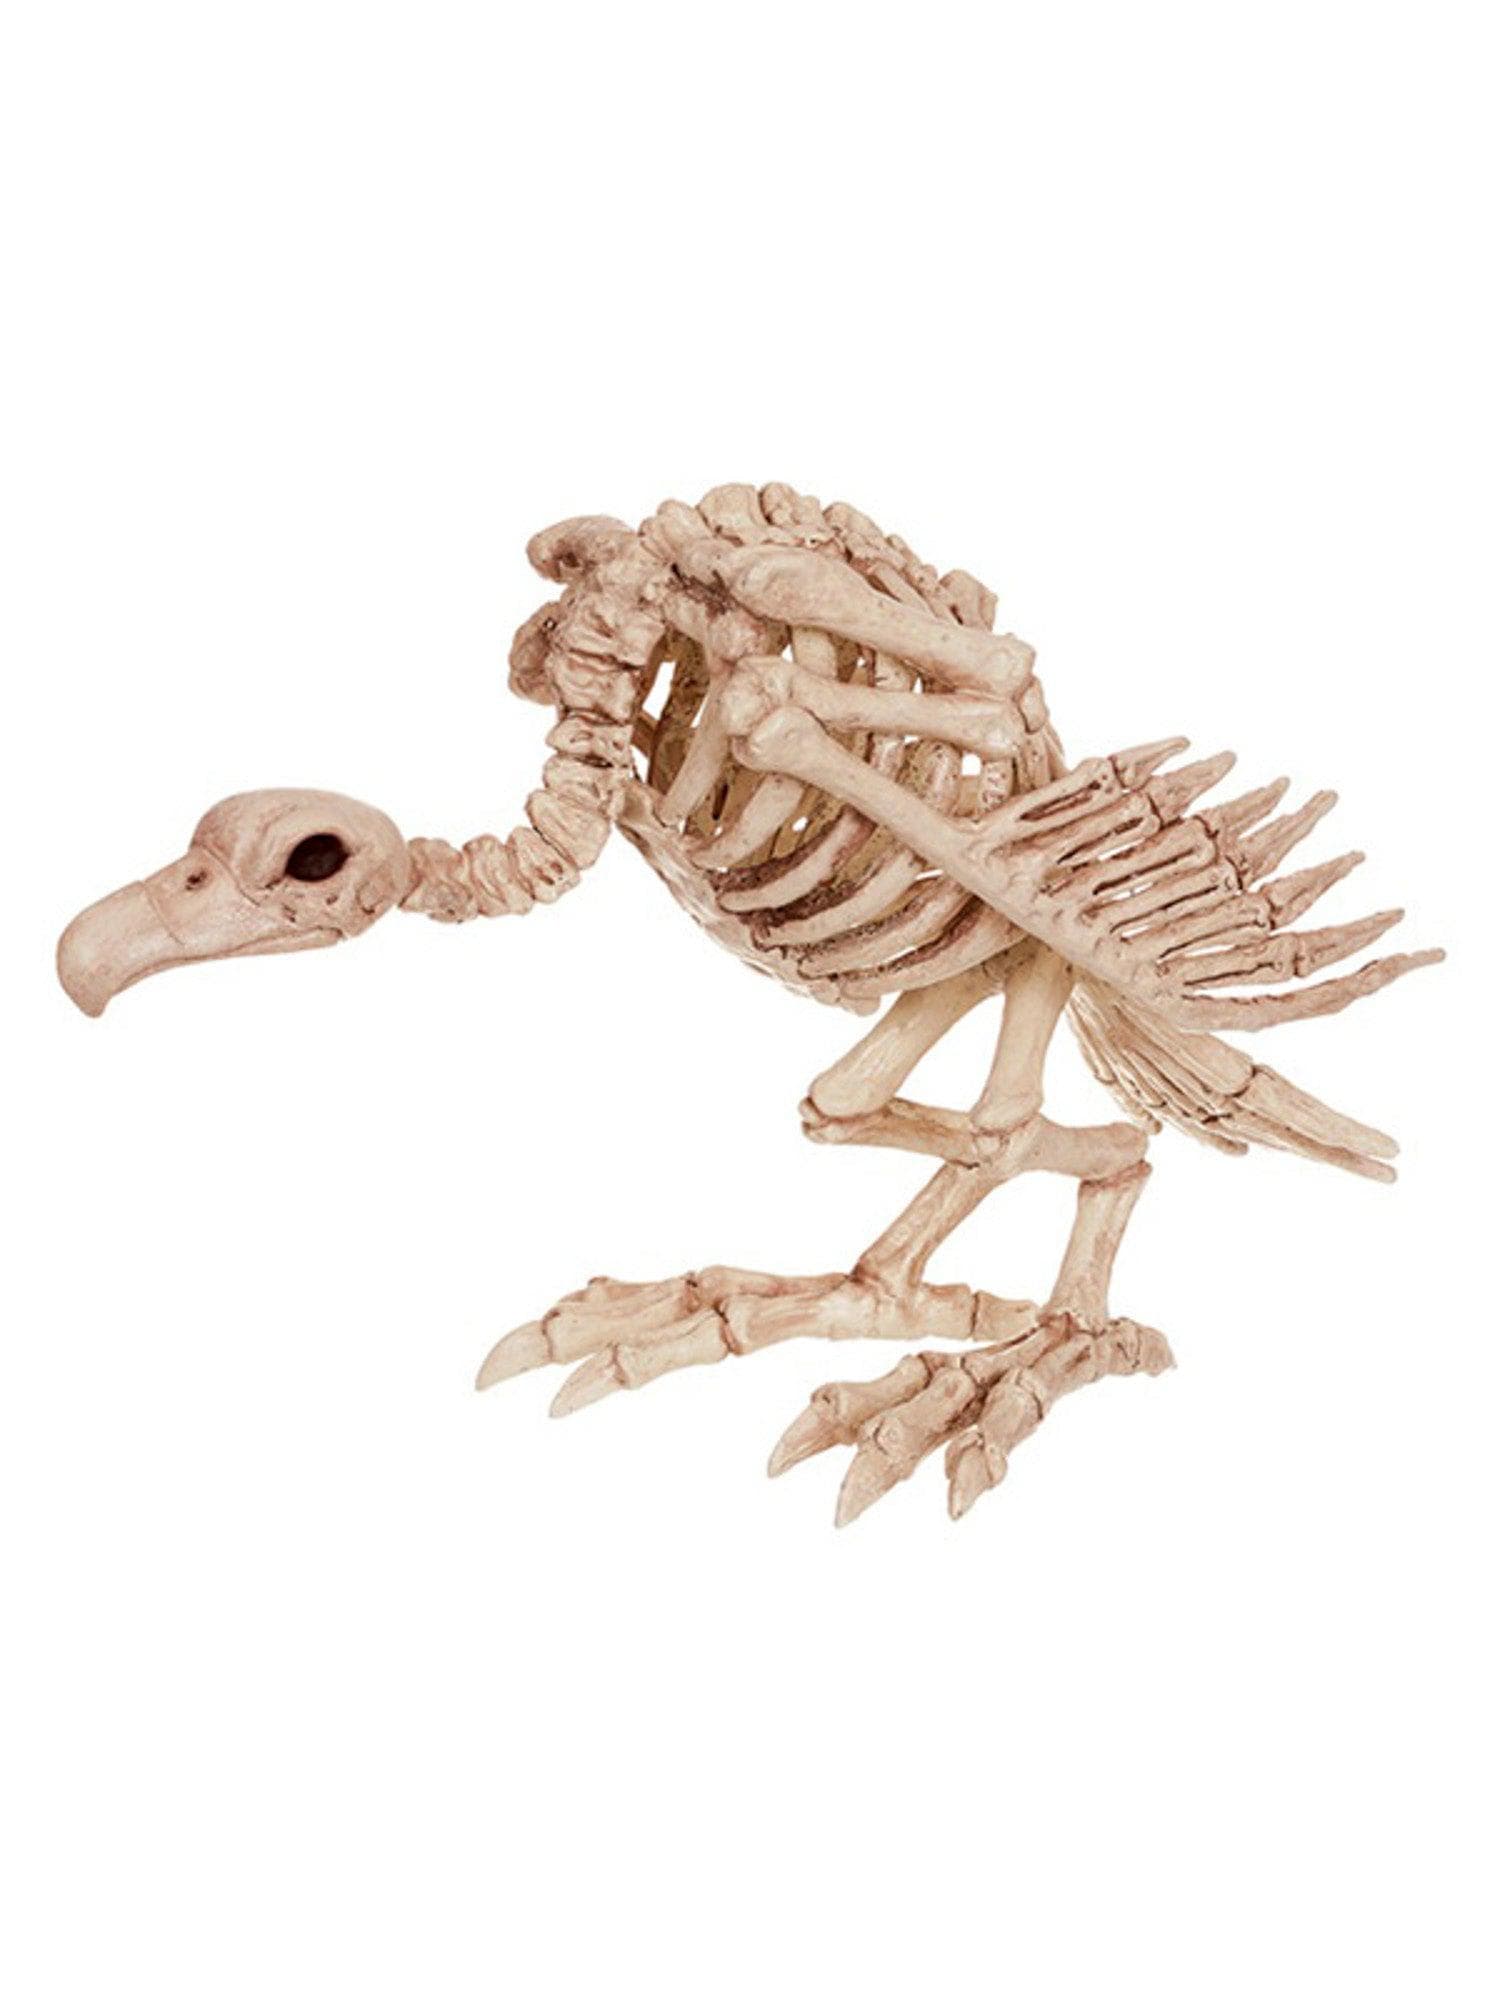 10 Inch Vulture Skeleton Prop - costumes.com